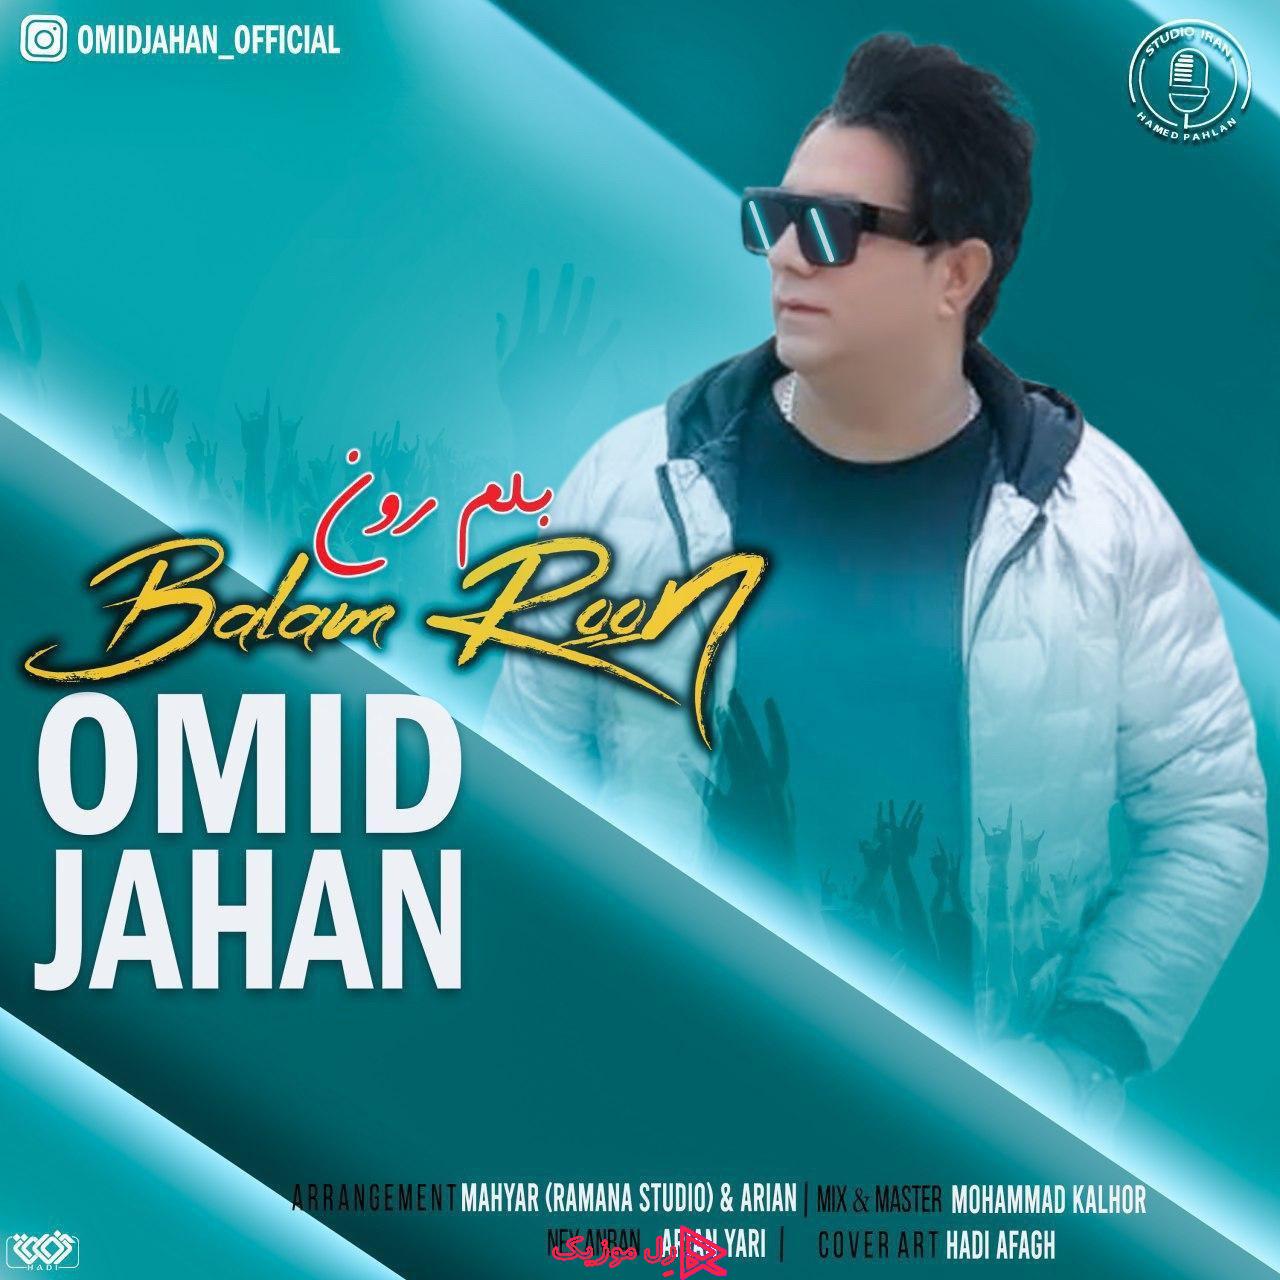 Omid Jahan Balamroon RellMusic - دانلود آهنگ امید جهان به نام بلم رون